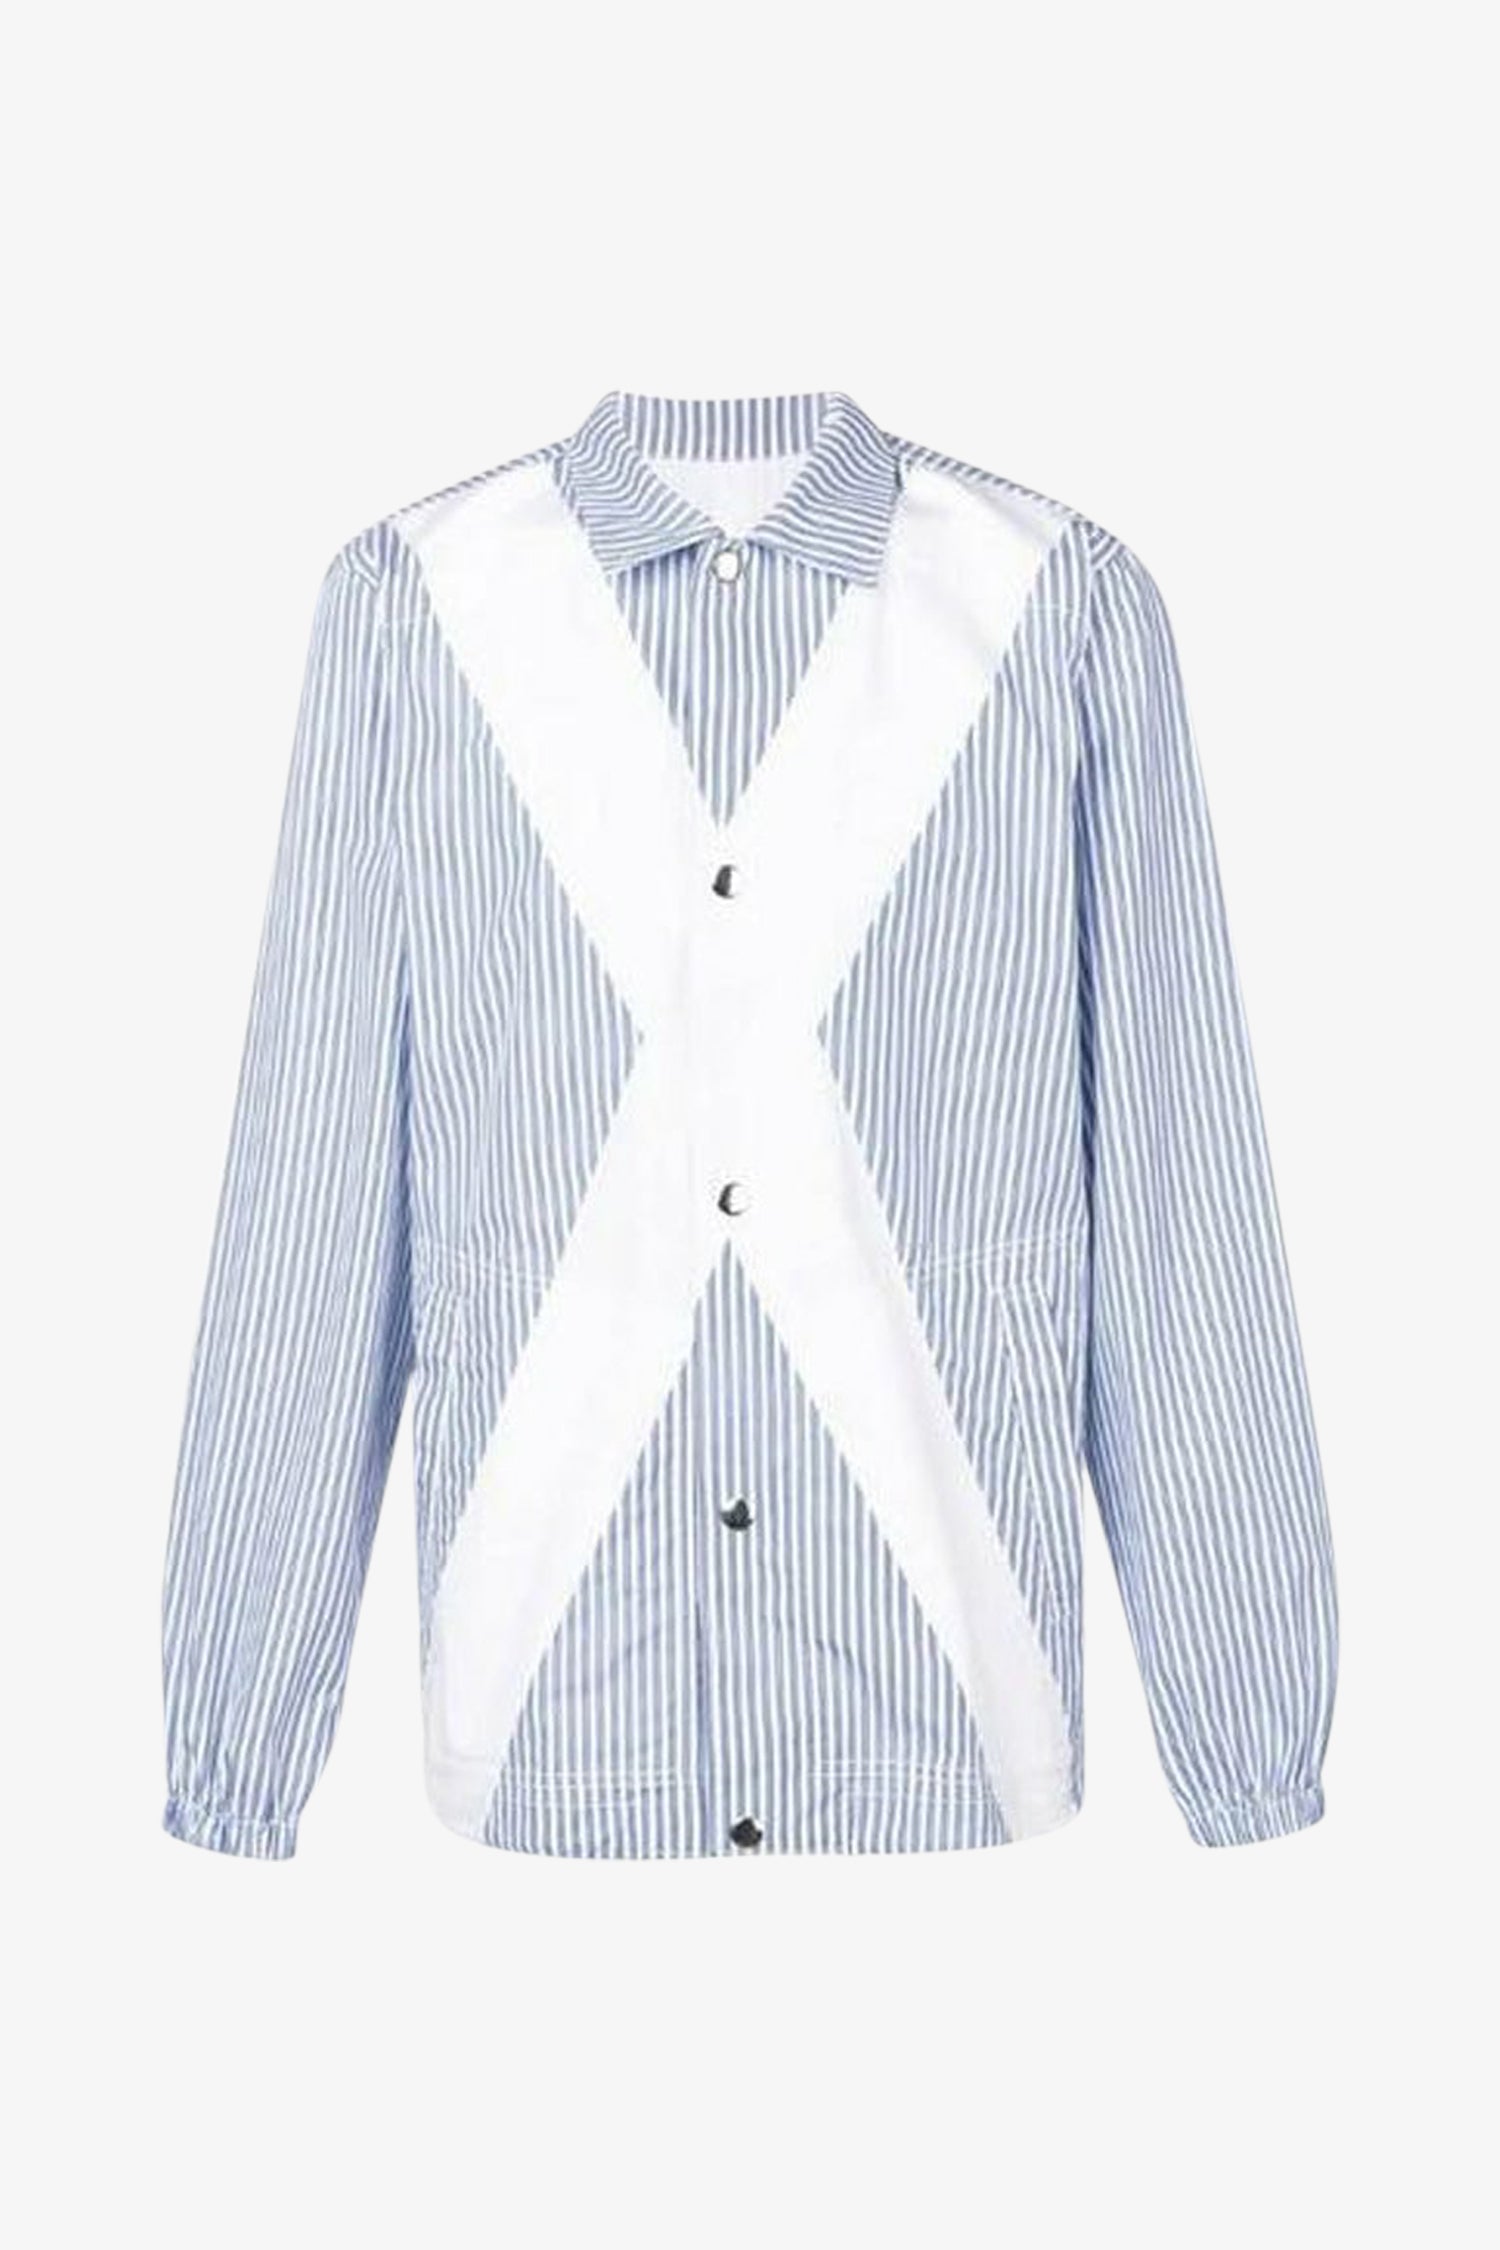 Selectshop FRAME - COMME DES GARÇONS SHIRT Striped Shirt Jacket Outerwear Dubai